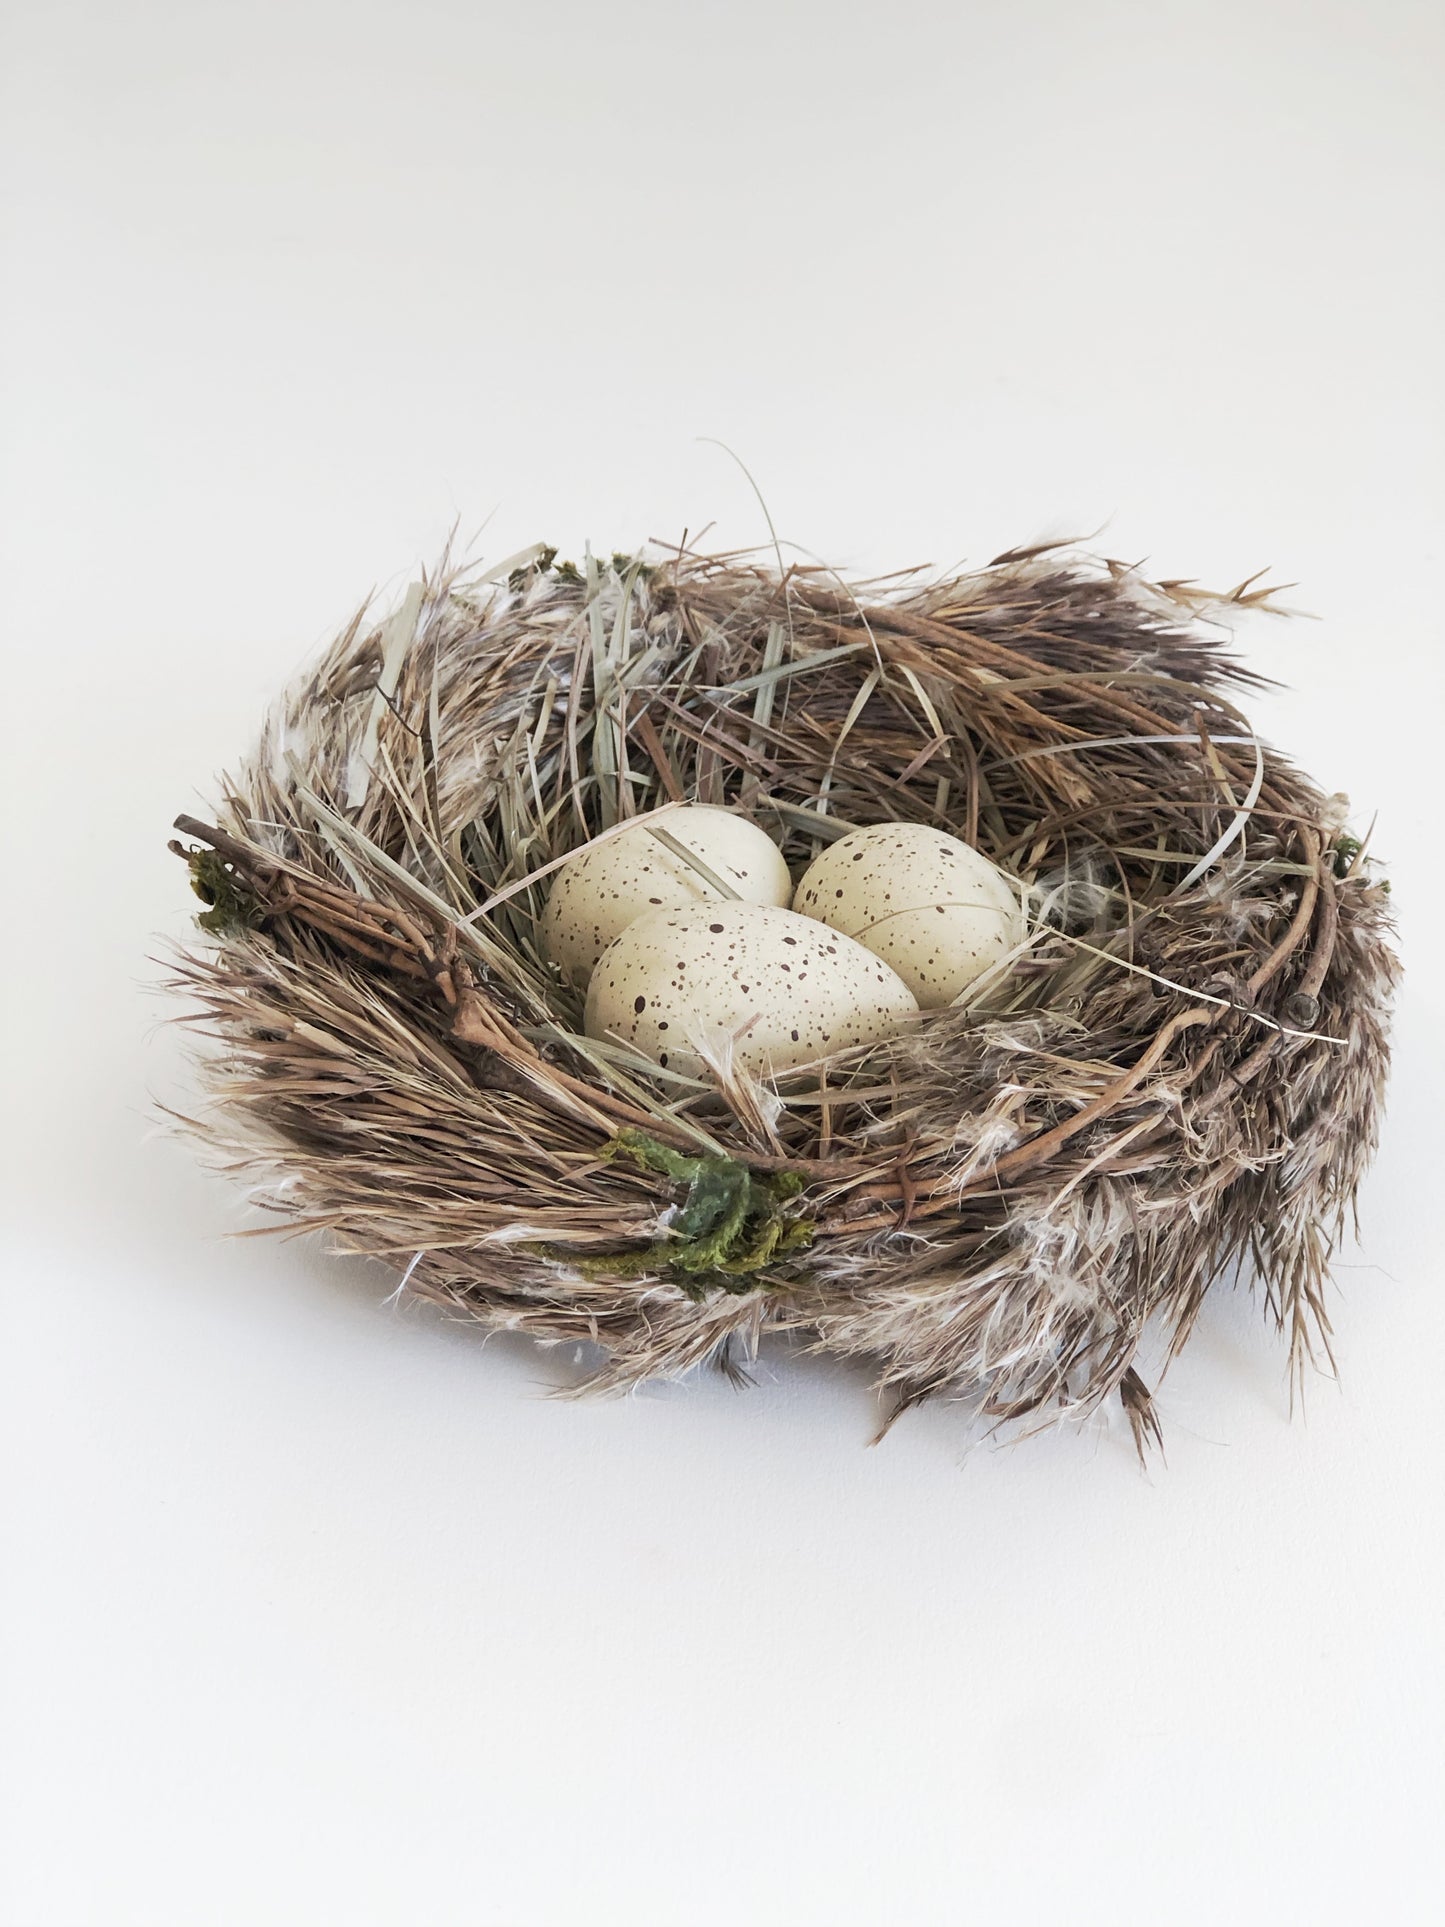 Grass Nest with cream eggs